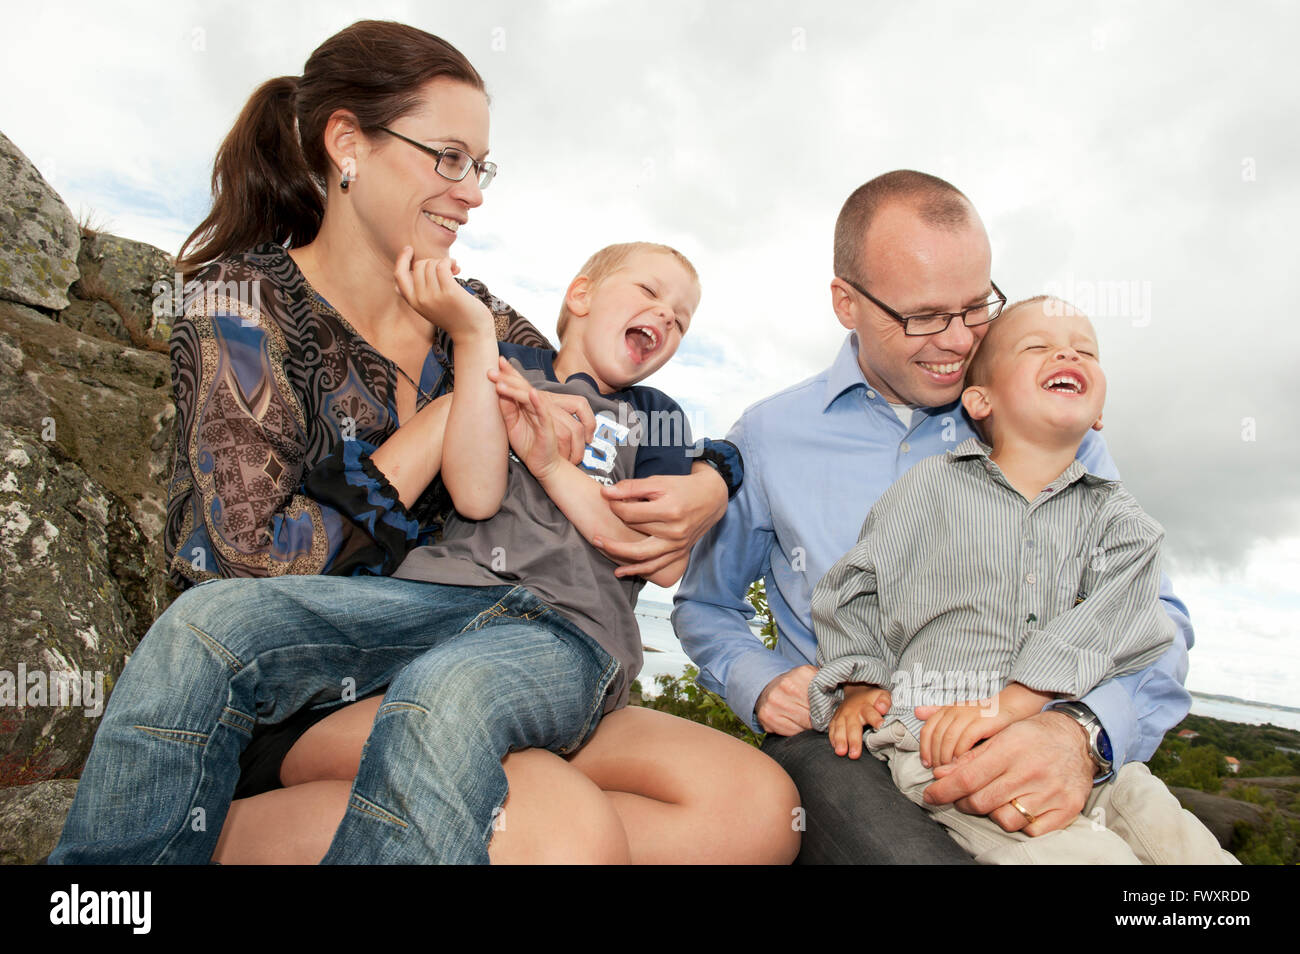 Sweden, Vastra Gotaland, Torslanda, Family with two children (4-5) sitting on rock Stock Photo